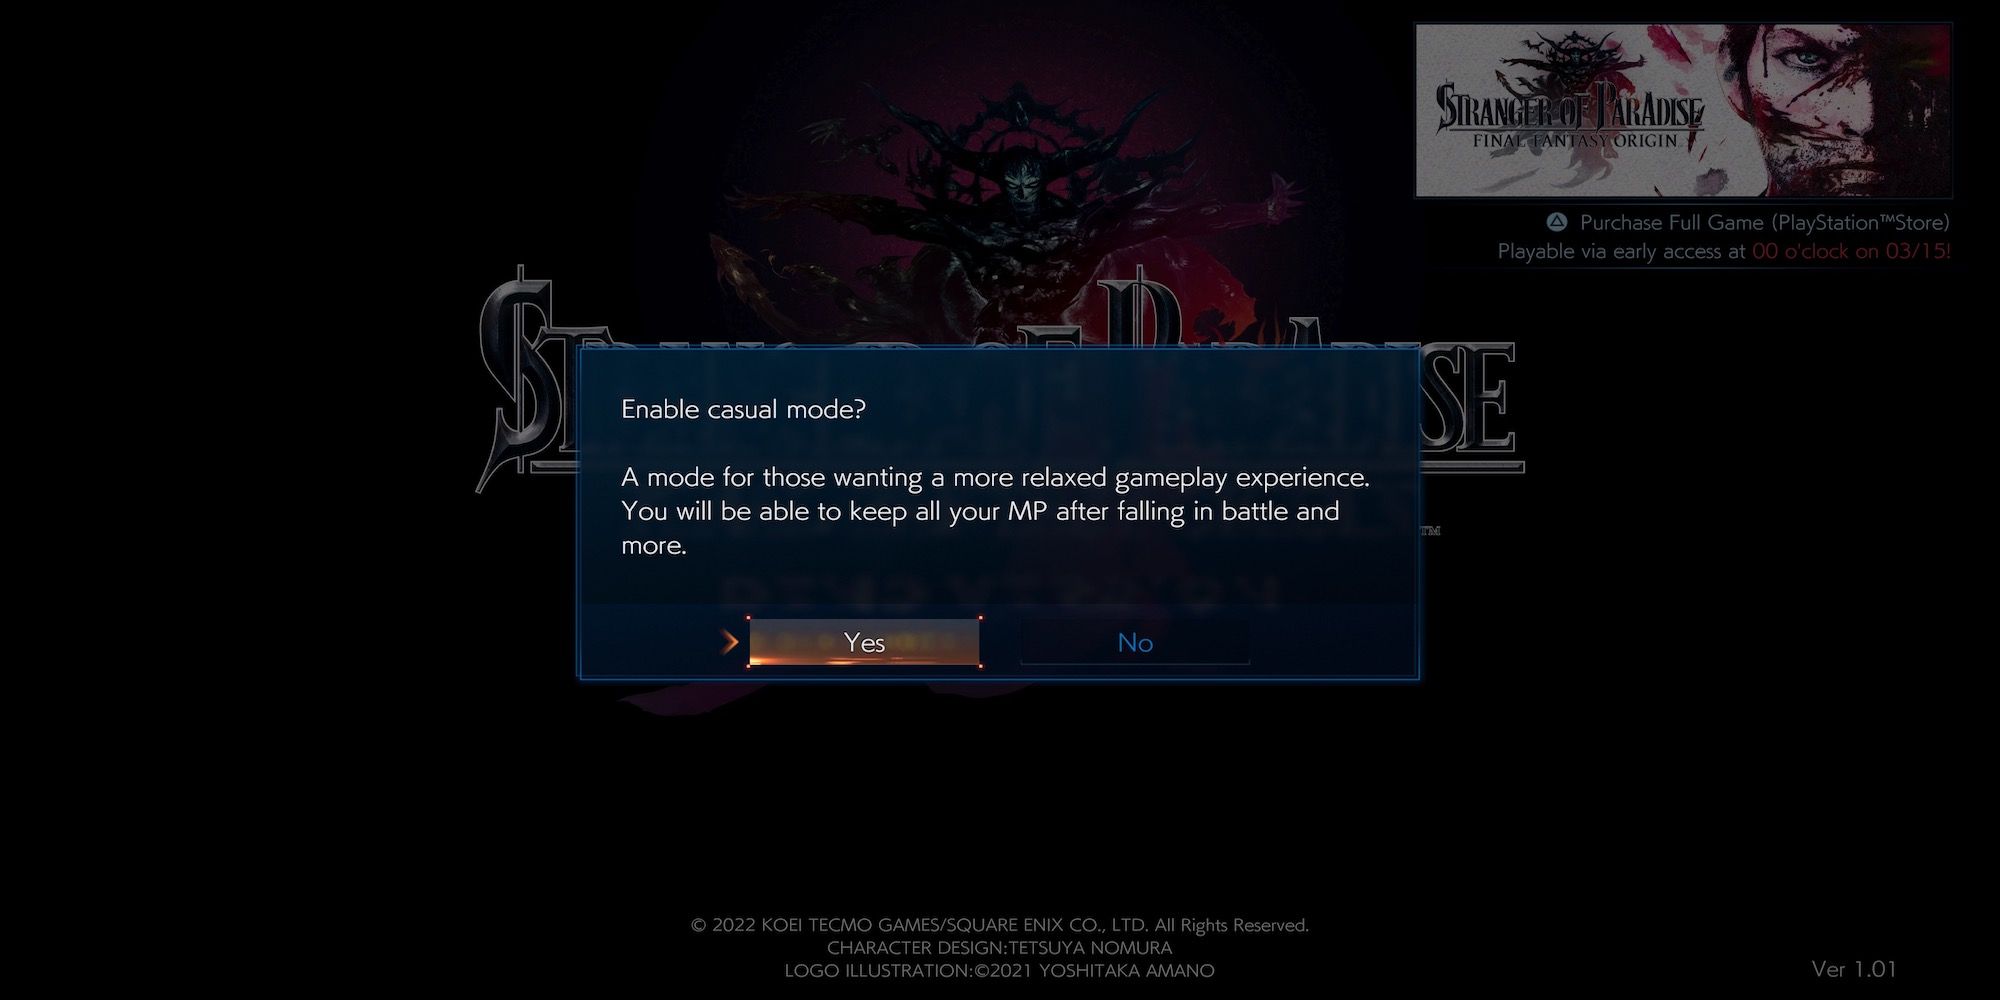 The difficulty menu in Stranger of Paradise Final Fantasy Origin